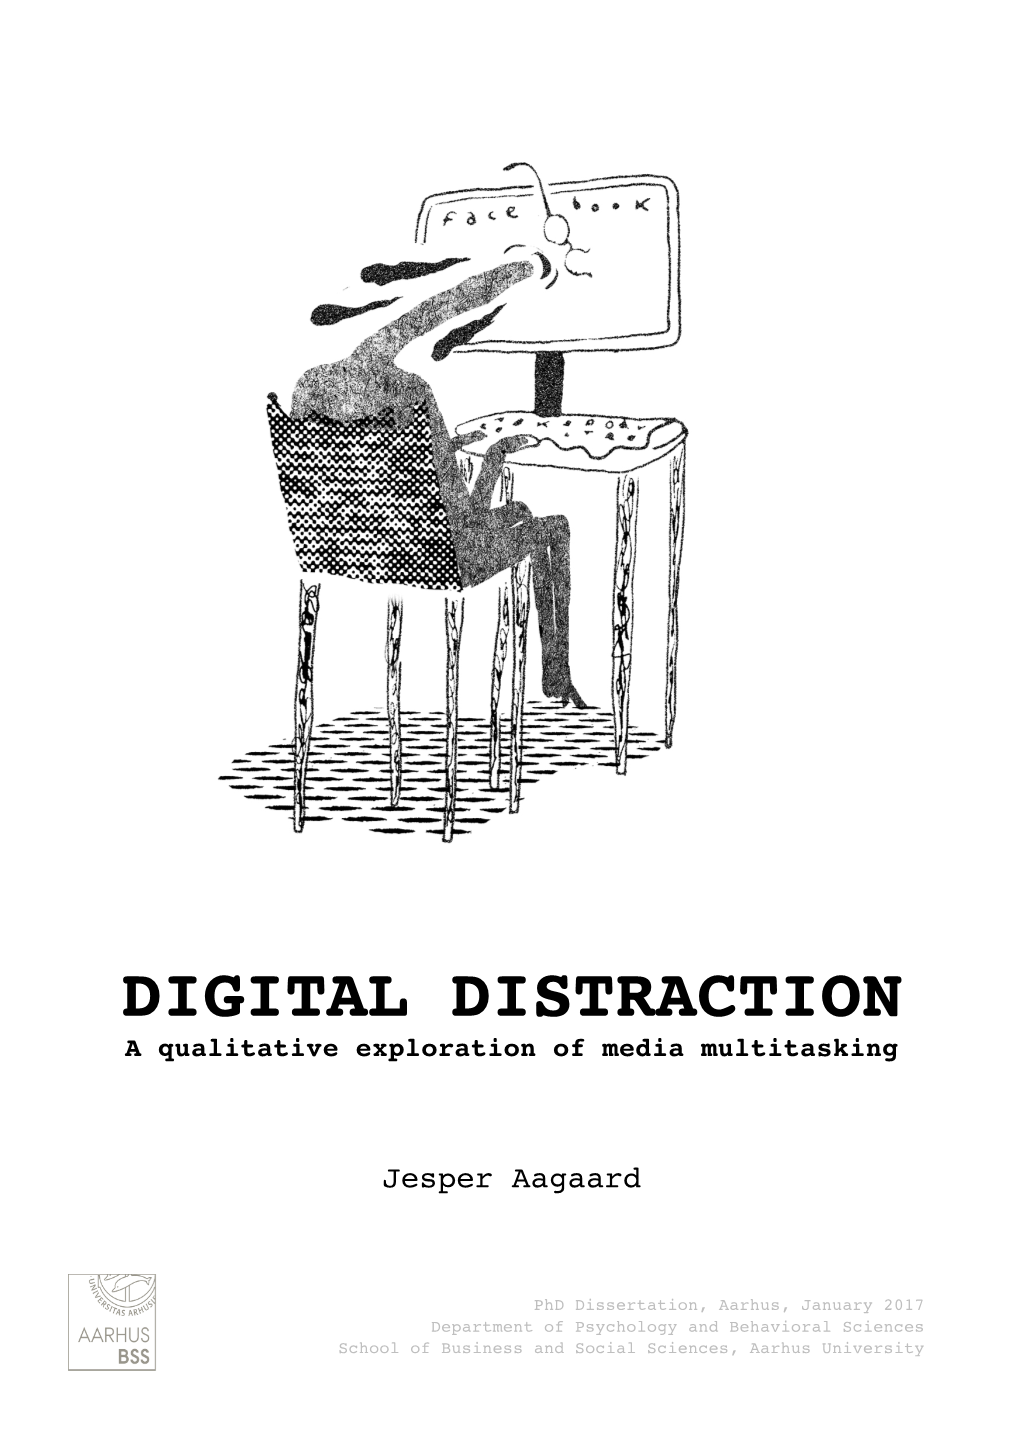 DIGITAL DISTRACTION a Qualitative Exploration of Media Multitasking